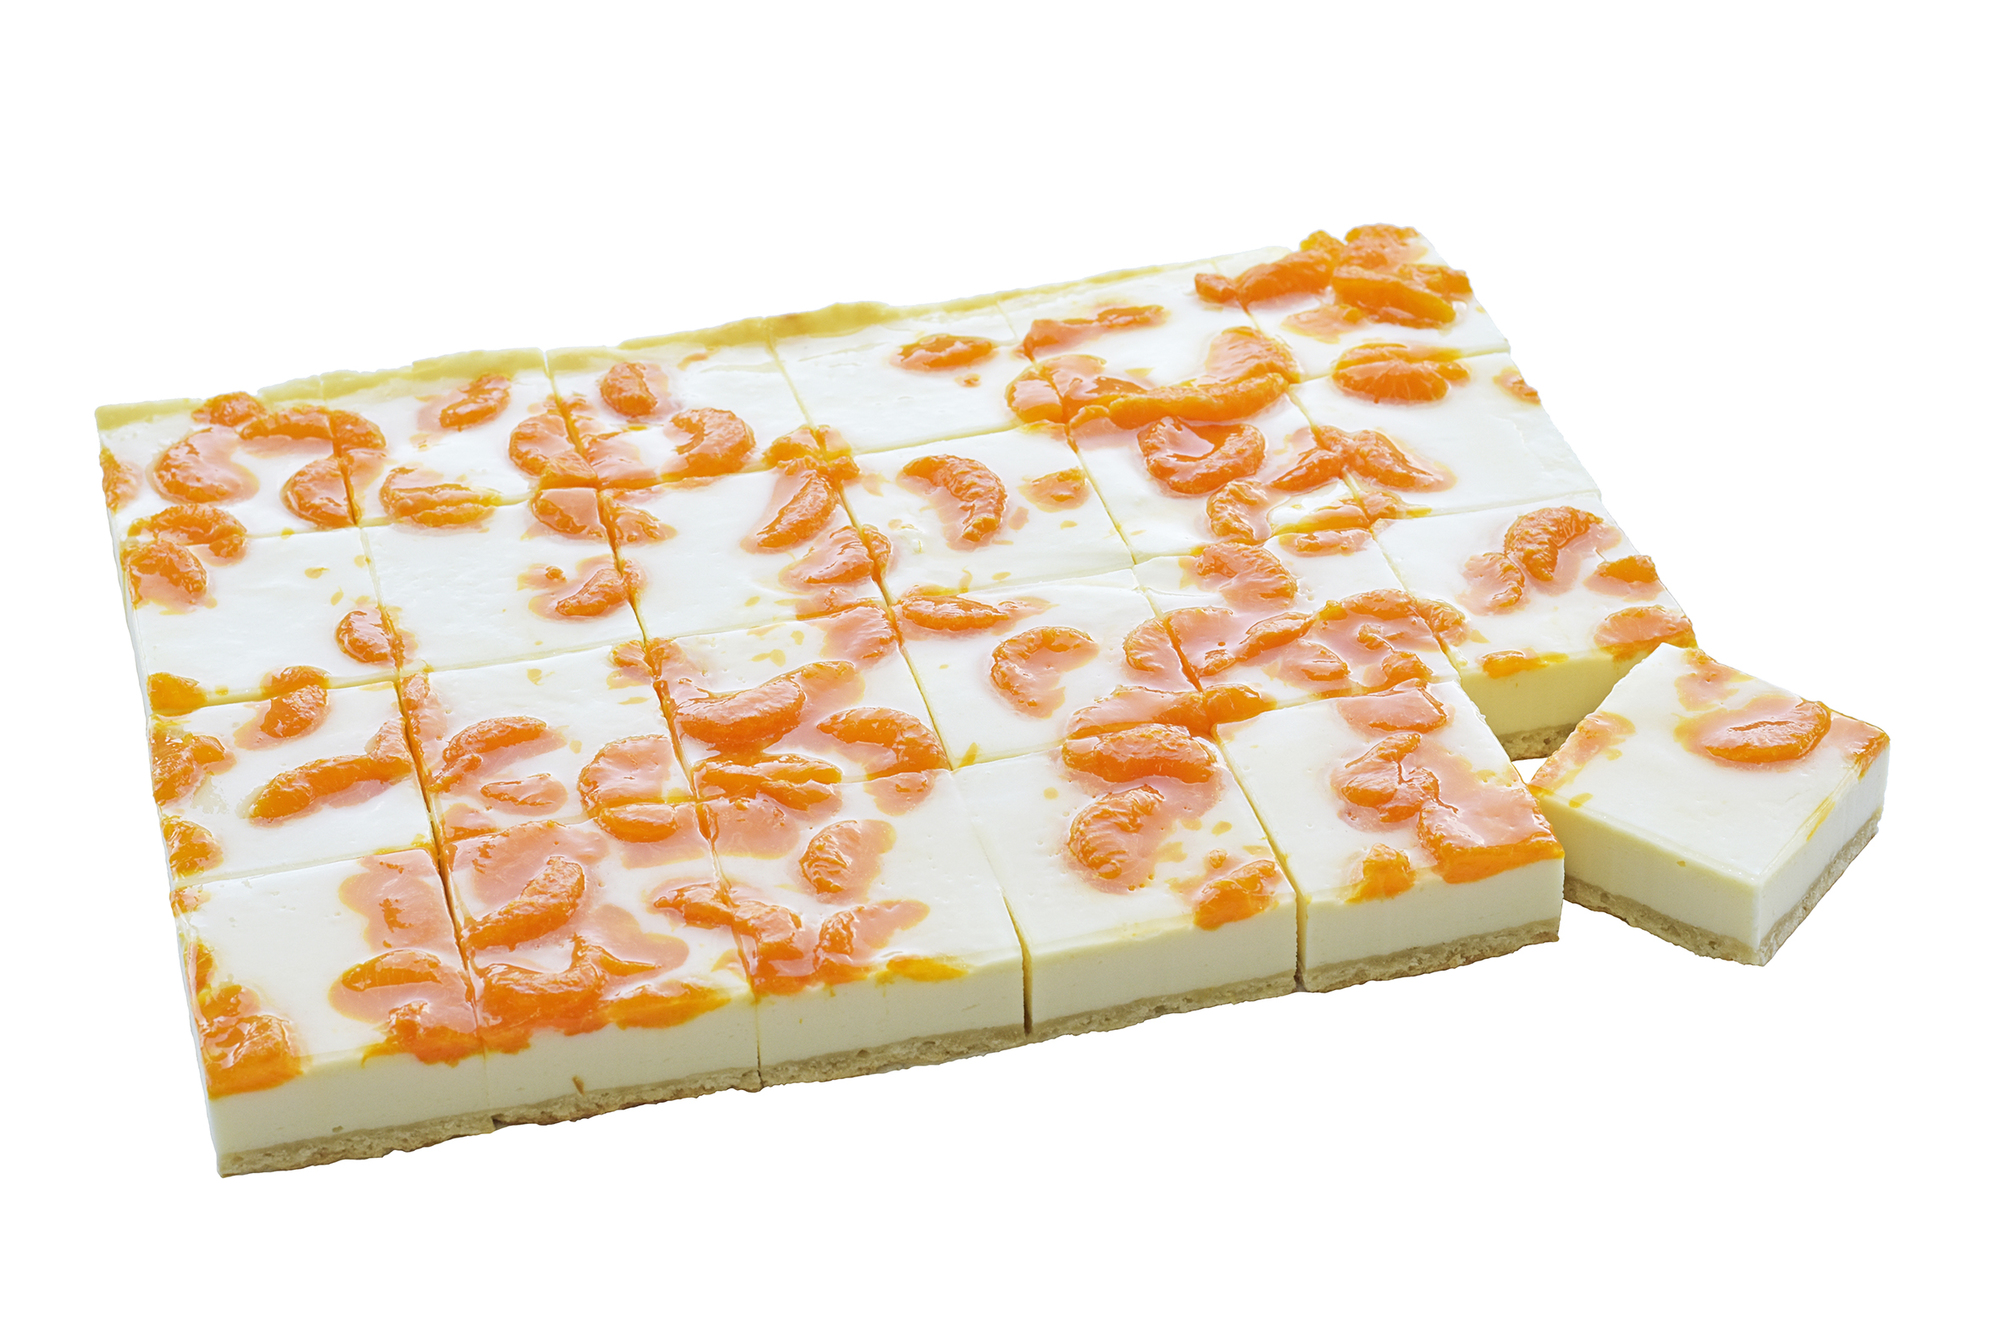 Käse-Mandarinen-Traum 2250g